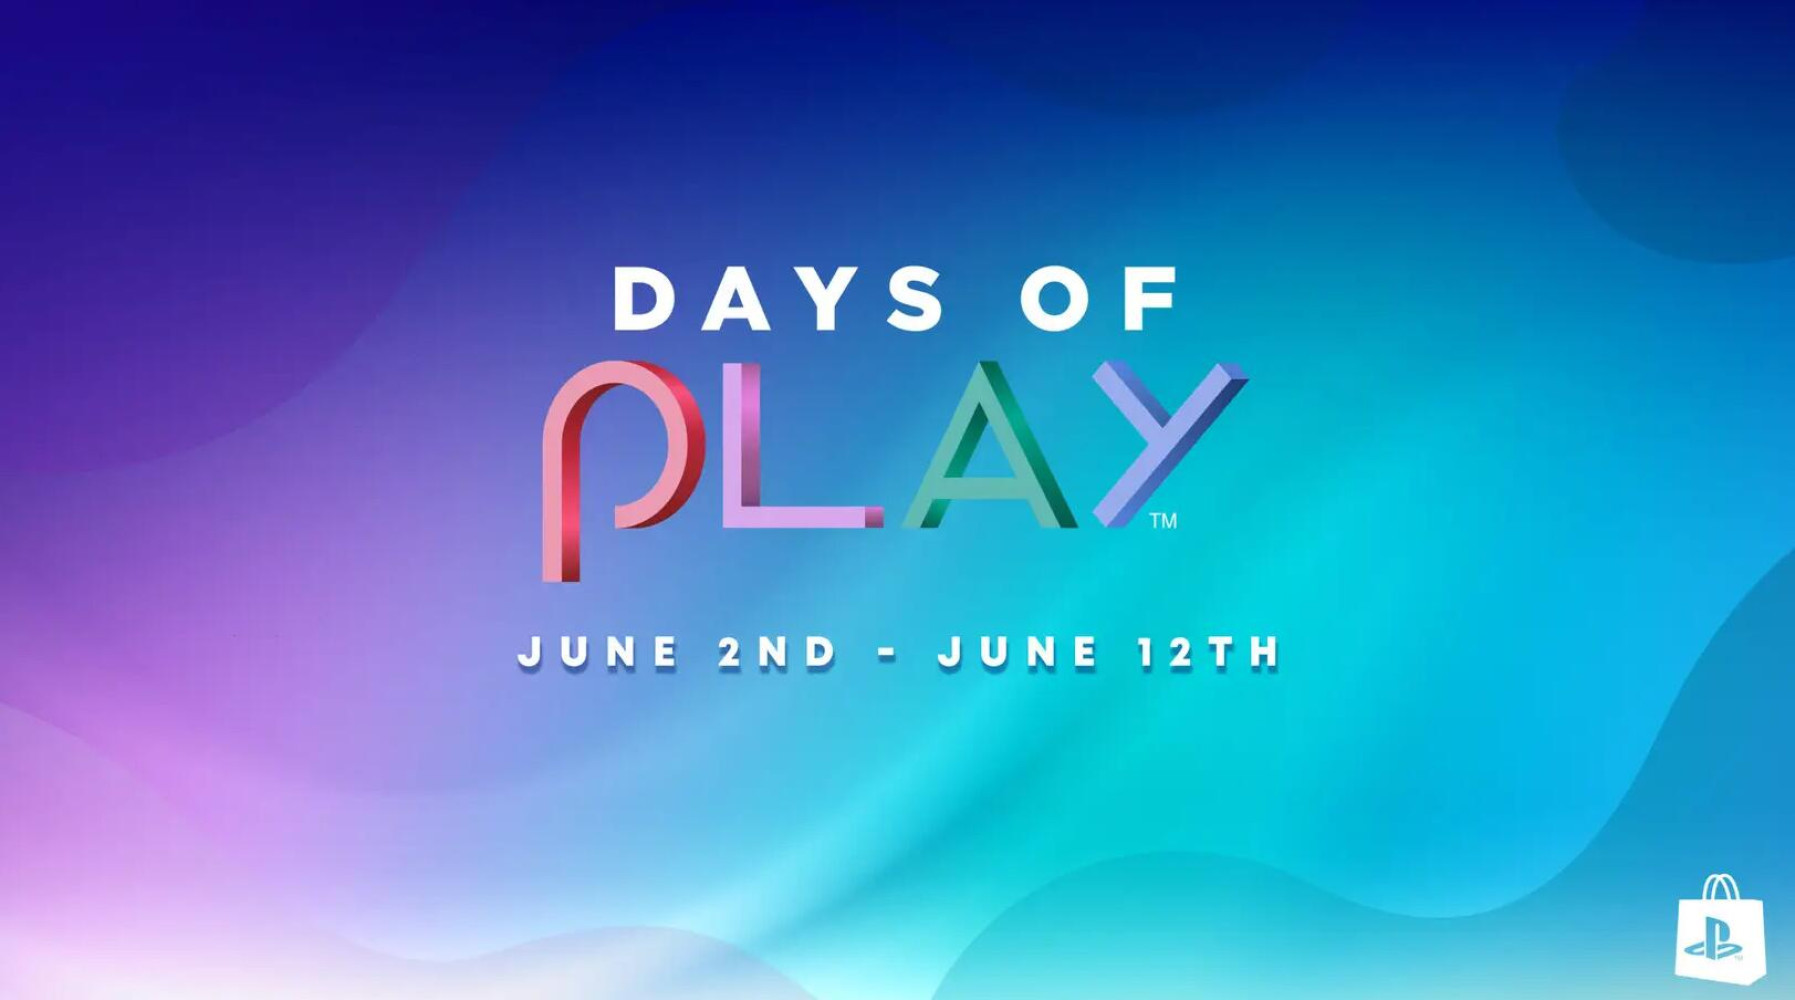 Playstation Days of Play 促销活动即将开始!